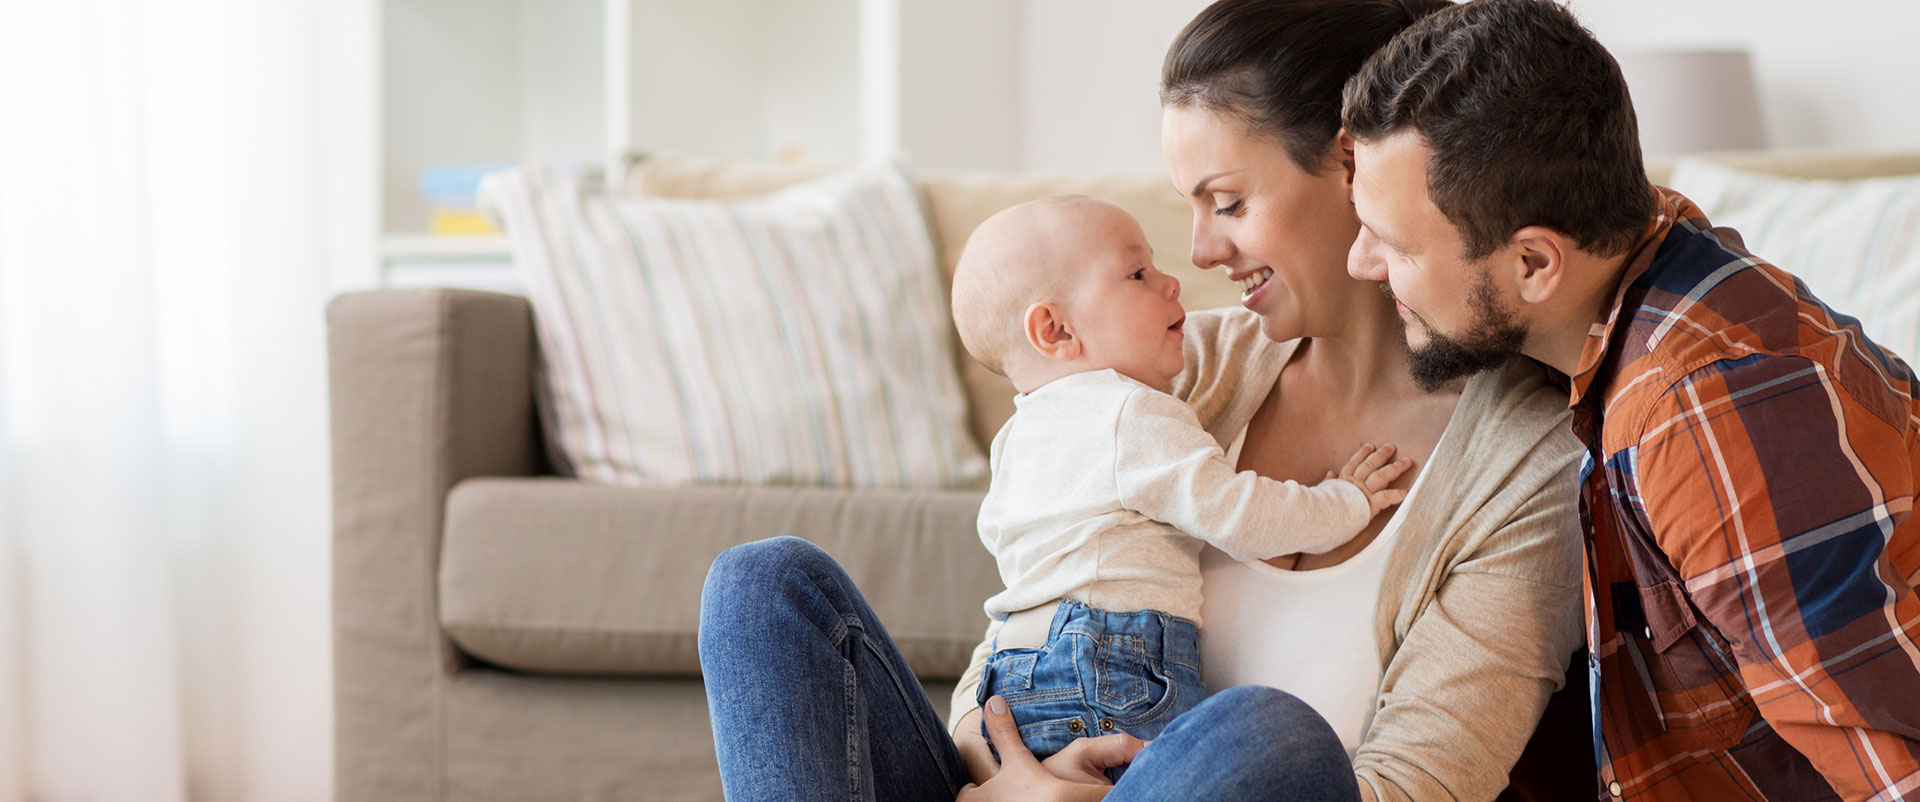 pregnancy infant adoption parent care foster adopt baby